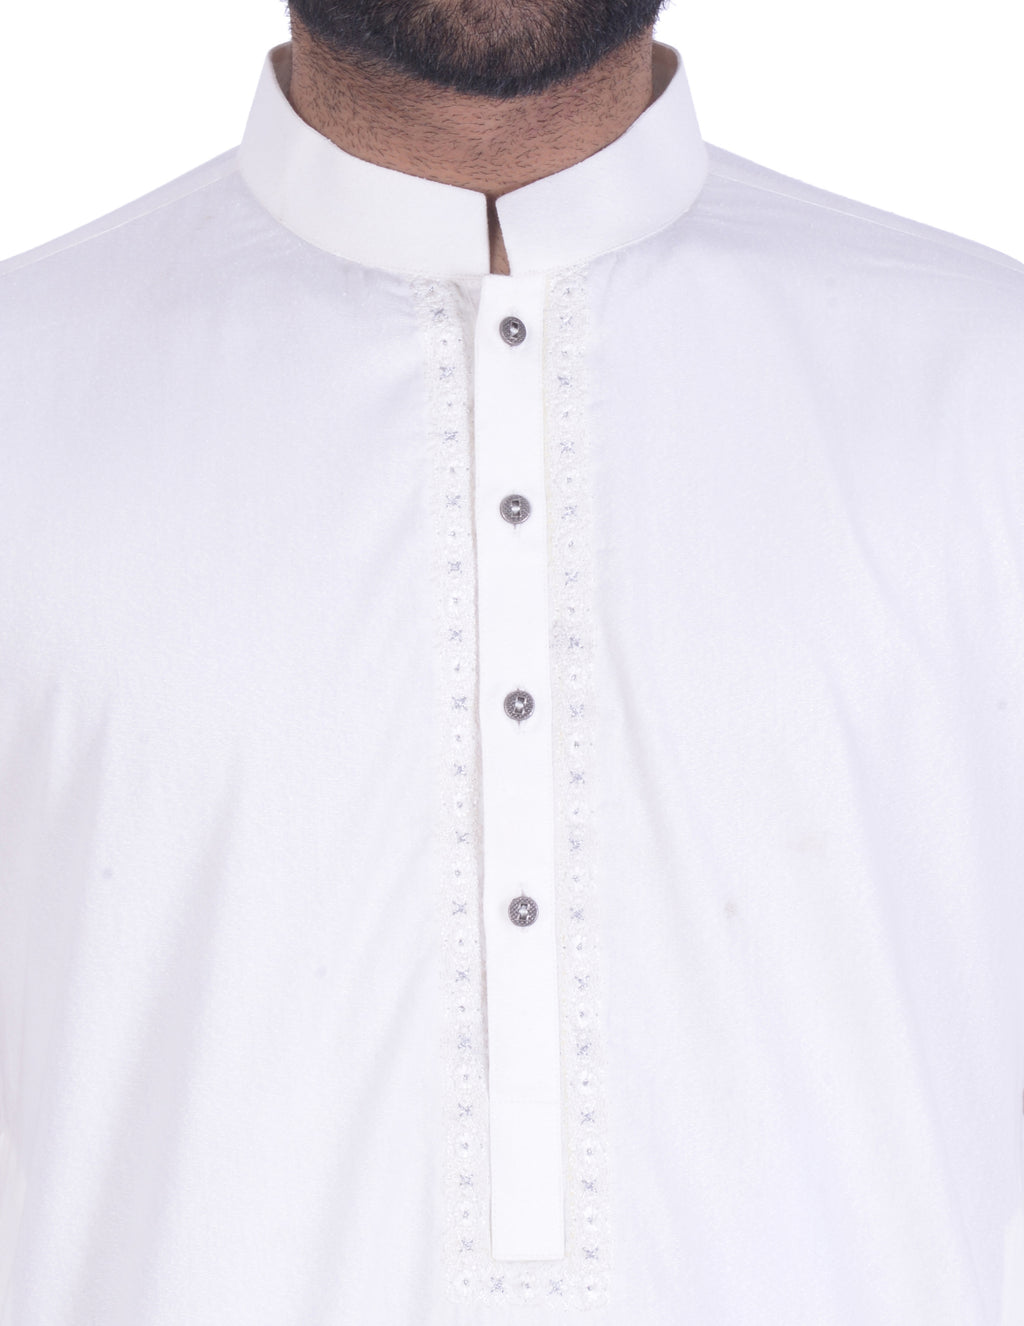 Off White Shalwar Qameez Suit. RQ-39123